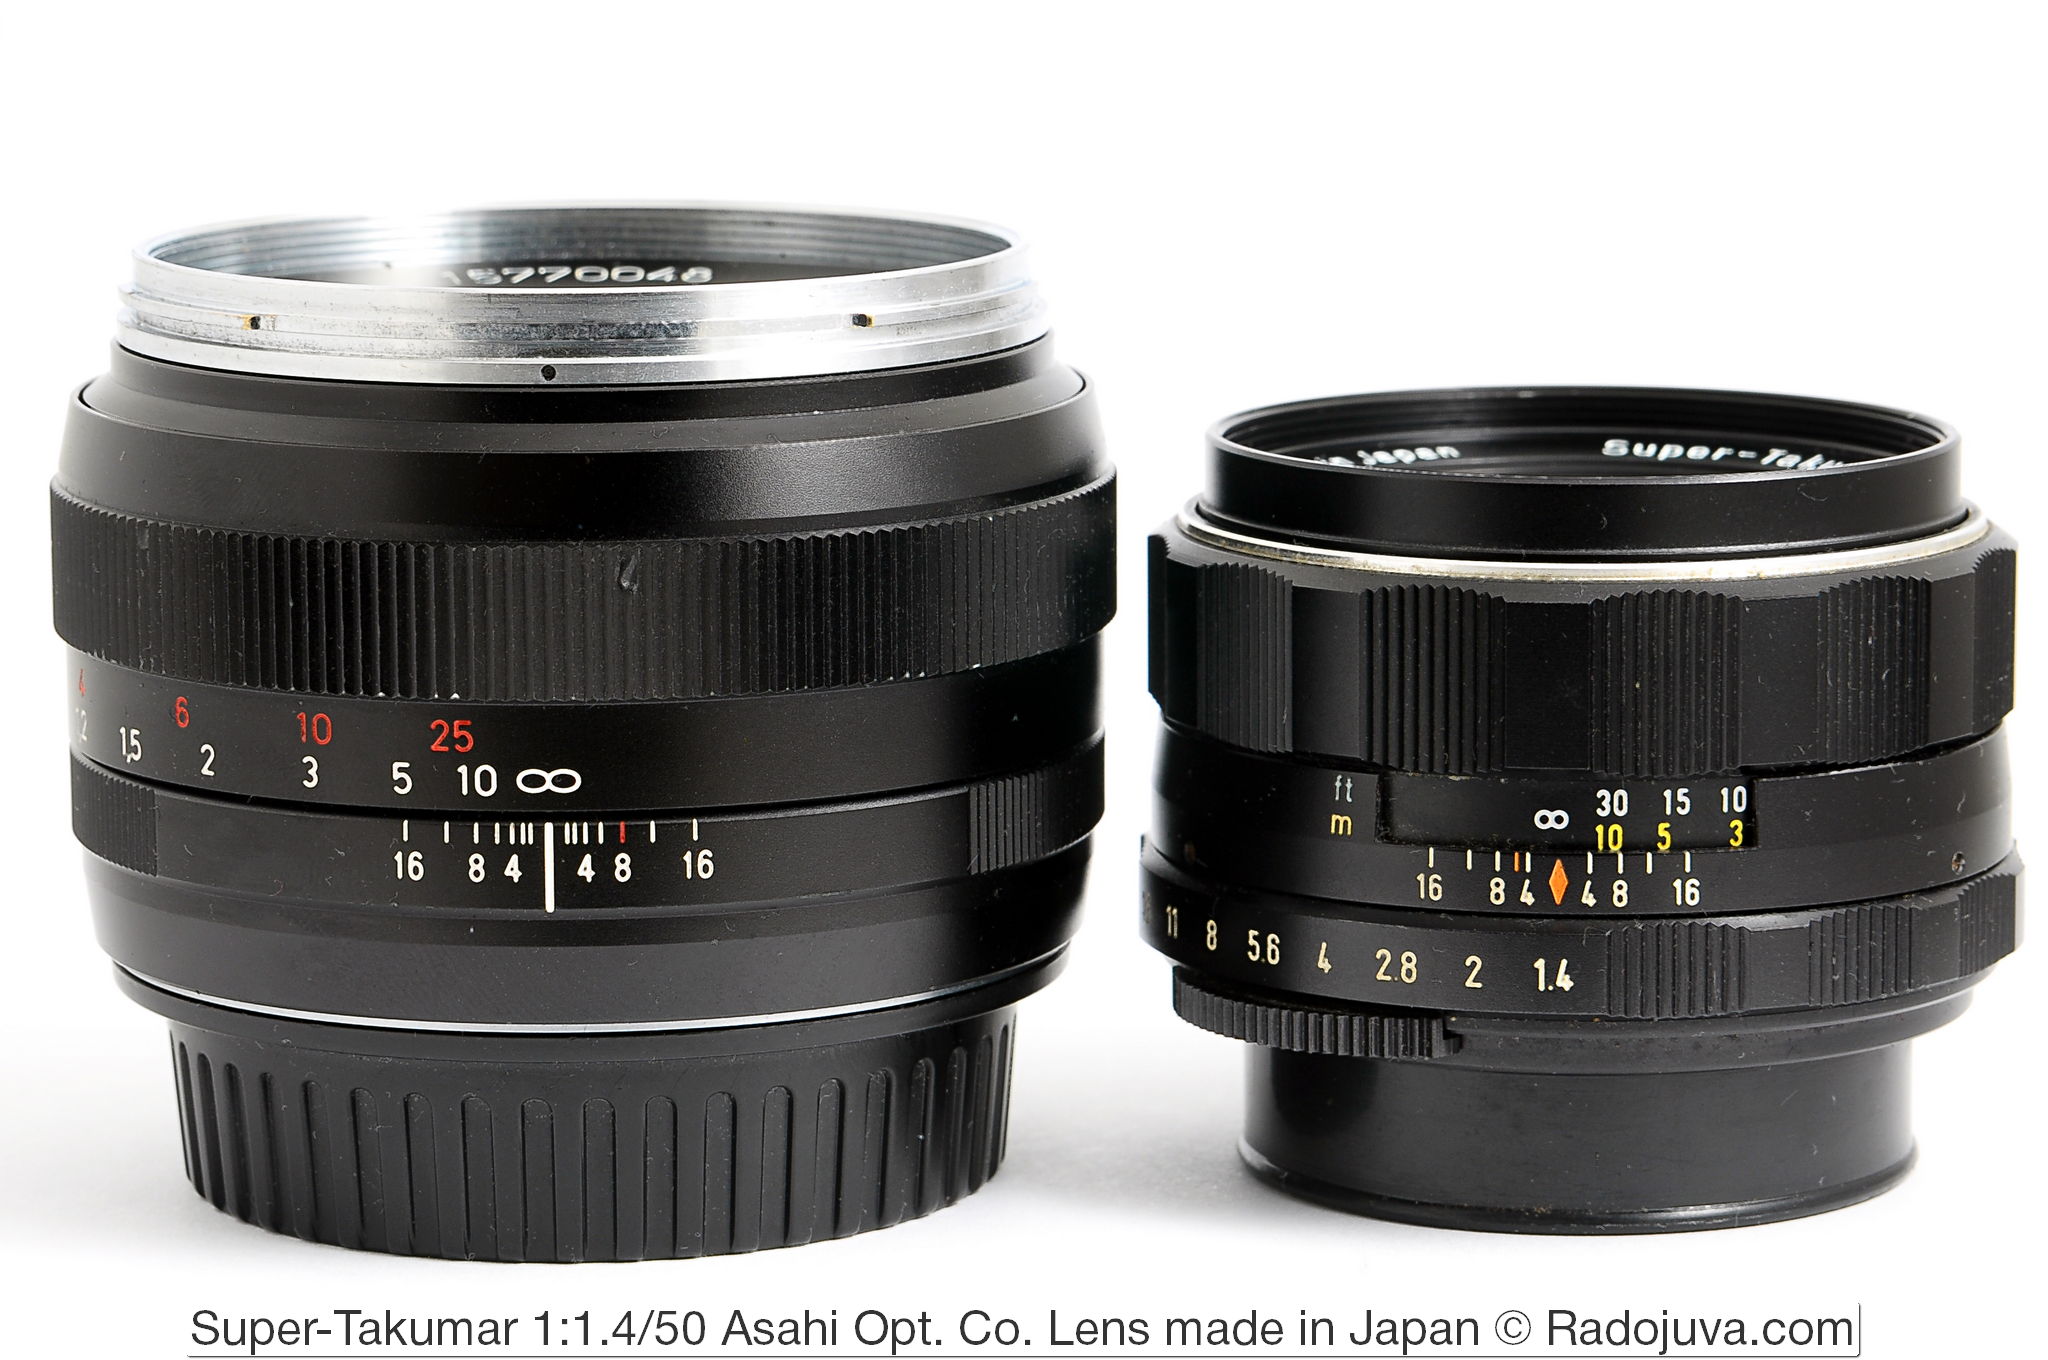 Super-Takumar 1:1.4/50 Asahi Opt. Co. Lens made in Japan